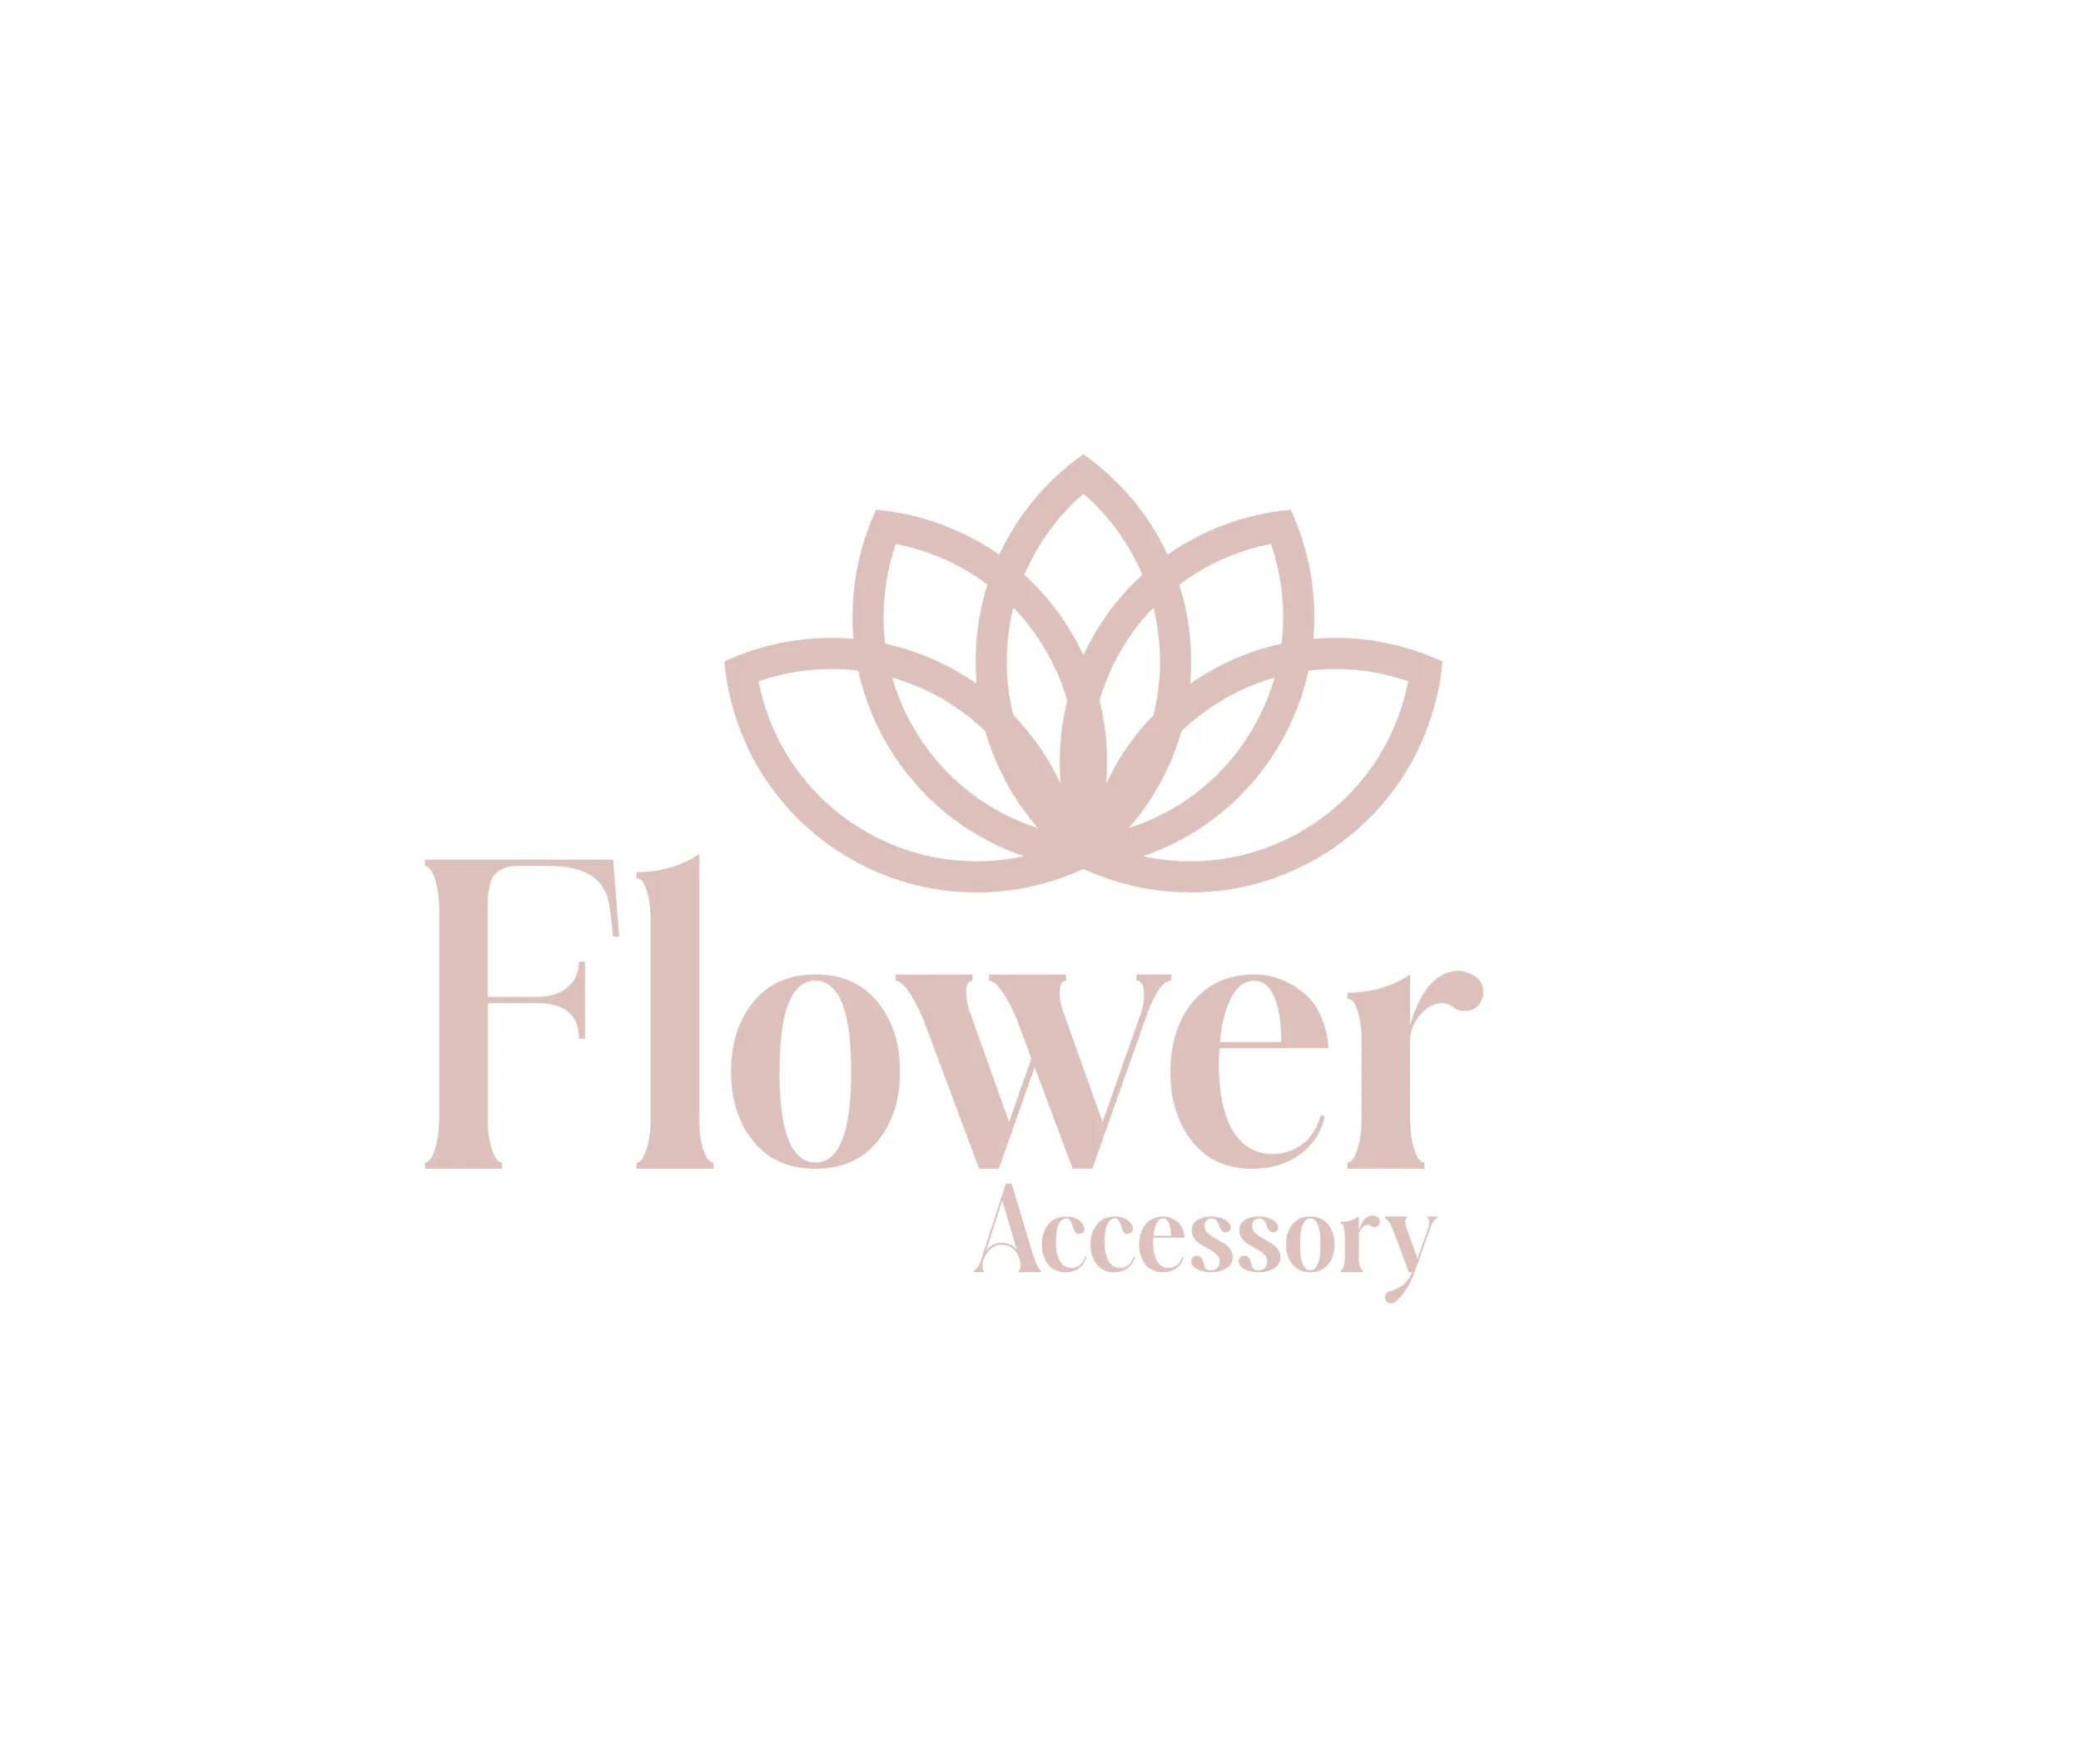 Flower Accessory Logo